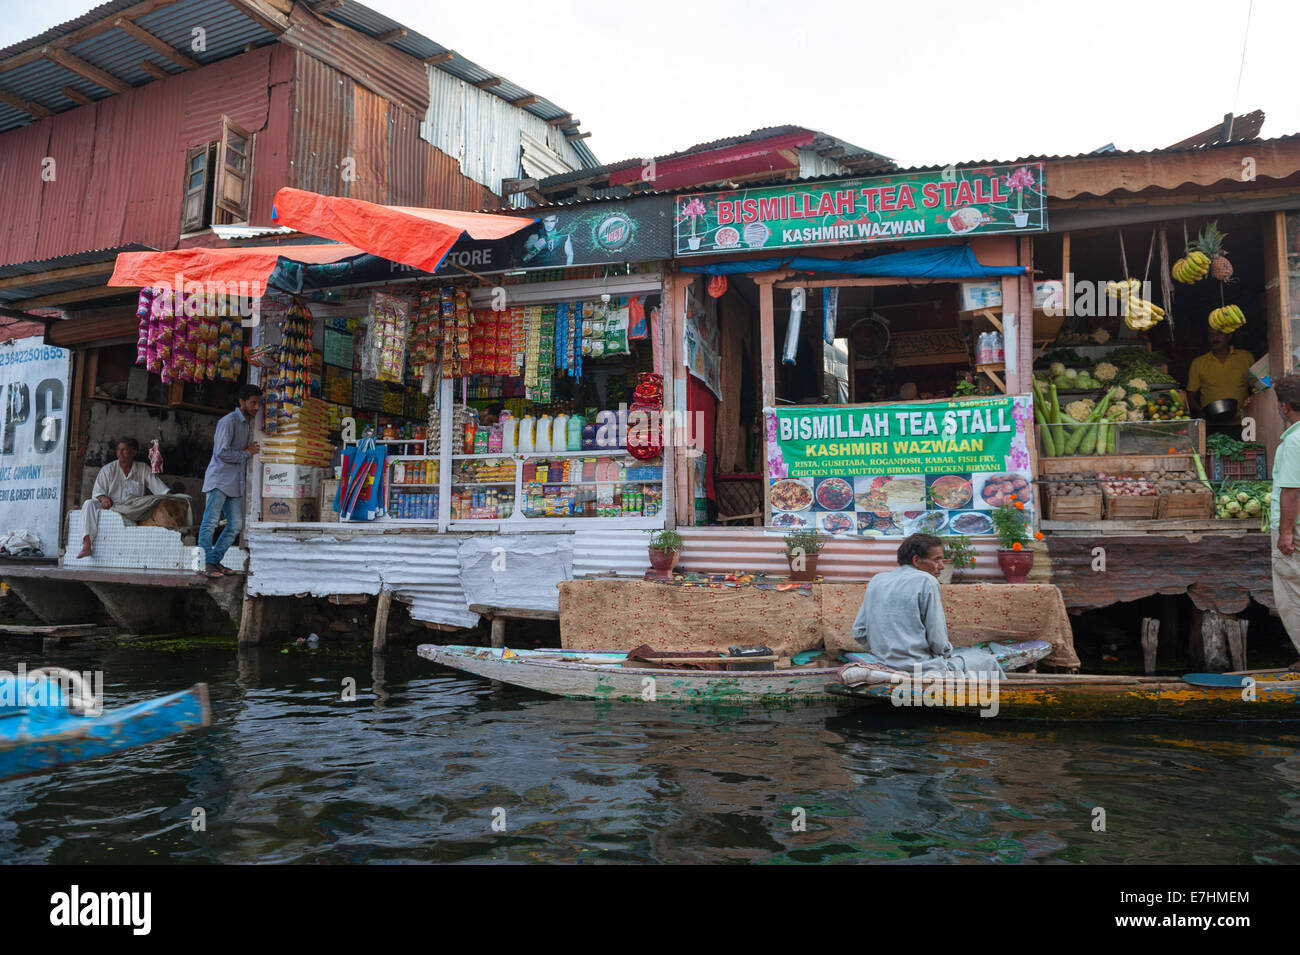 Kashmir, Dal Lake, Boat, House boat, 'Jammu & Kashmir', Srinagar, Shikara, Shopping, Market, Floating Market Stock Photo